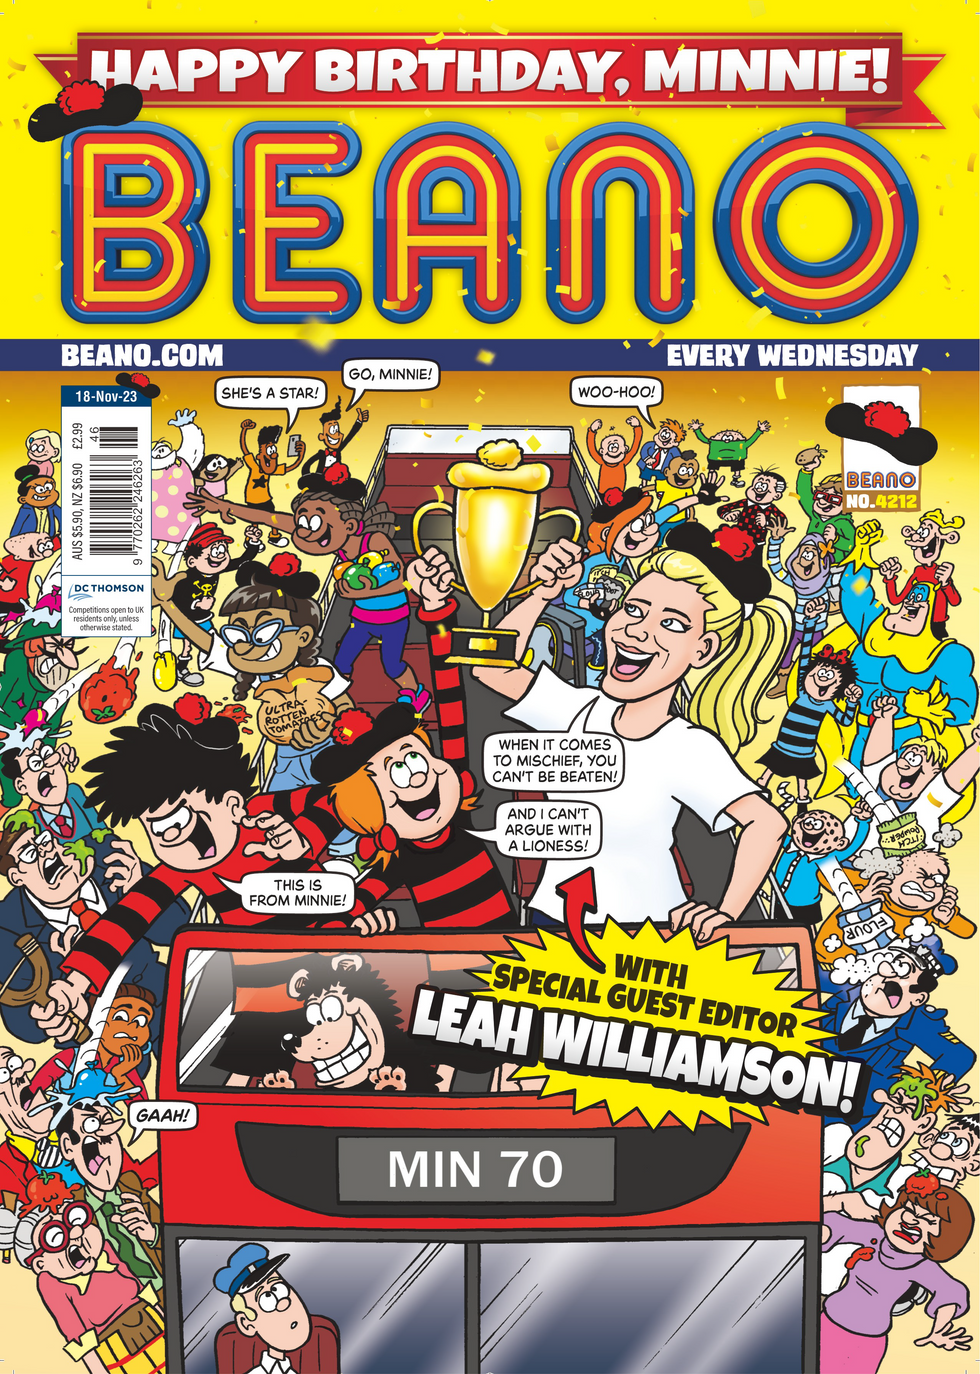 Lioness Leah Williamson guest-edits Beano to mark Minnie the Minx 70th birthday